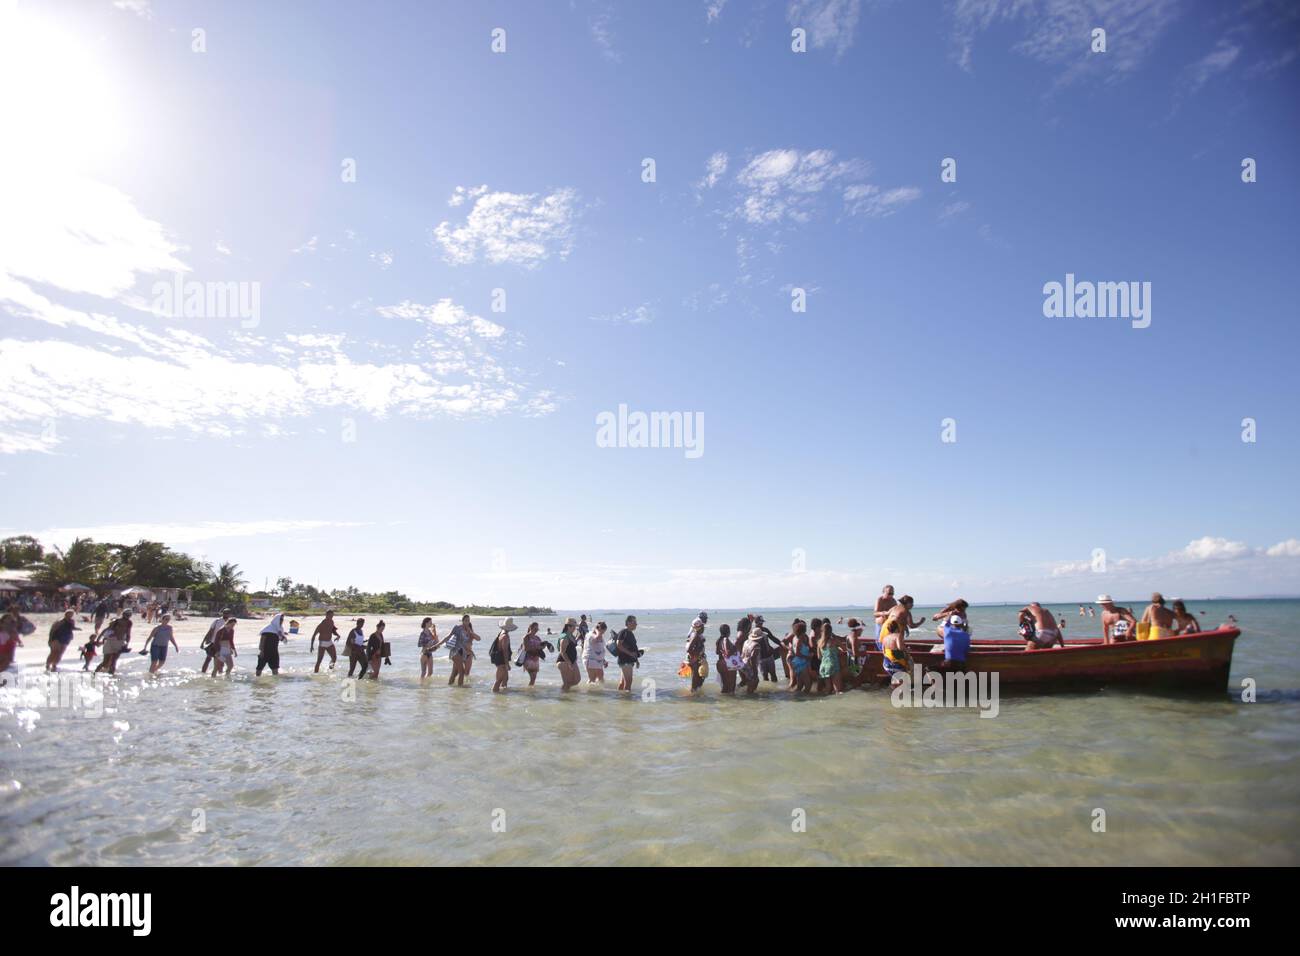 salvador, bahia / brazil - january 31, 2018: Tourists board schooners to gain access to Ponta de Areia beach in Itaparica Island. *** Local Caption ** Stock Photo